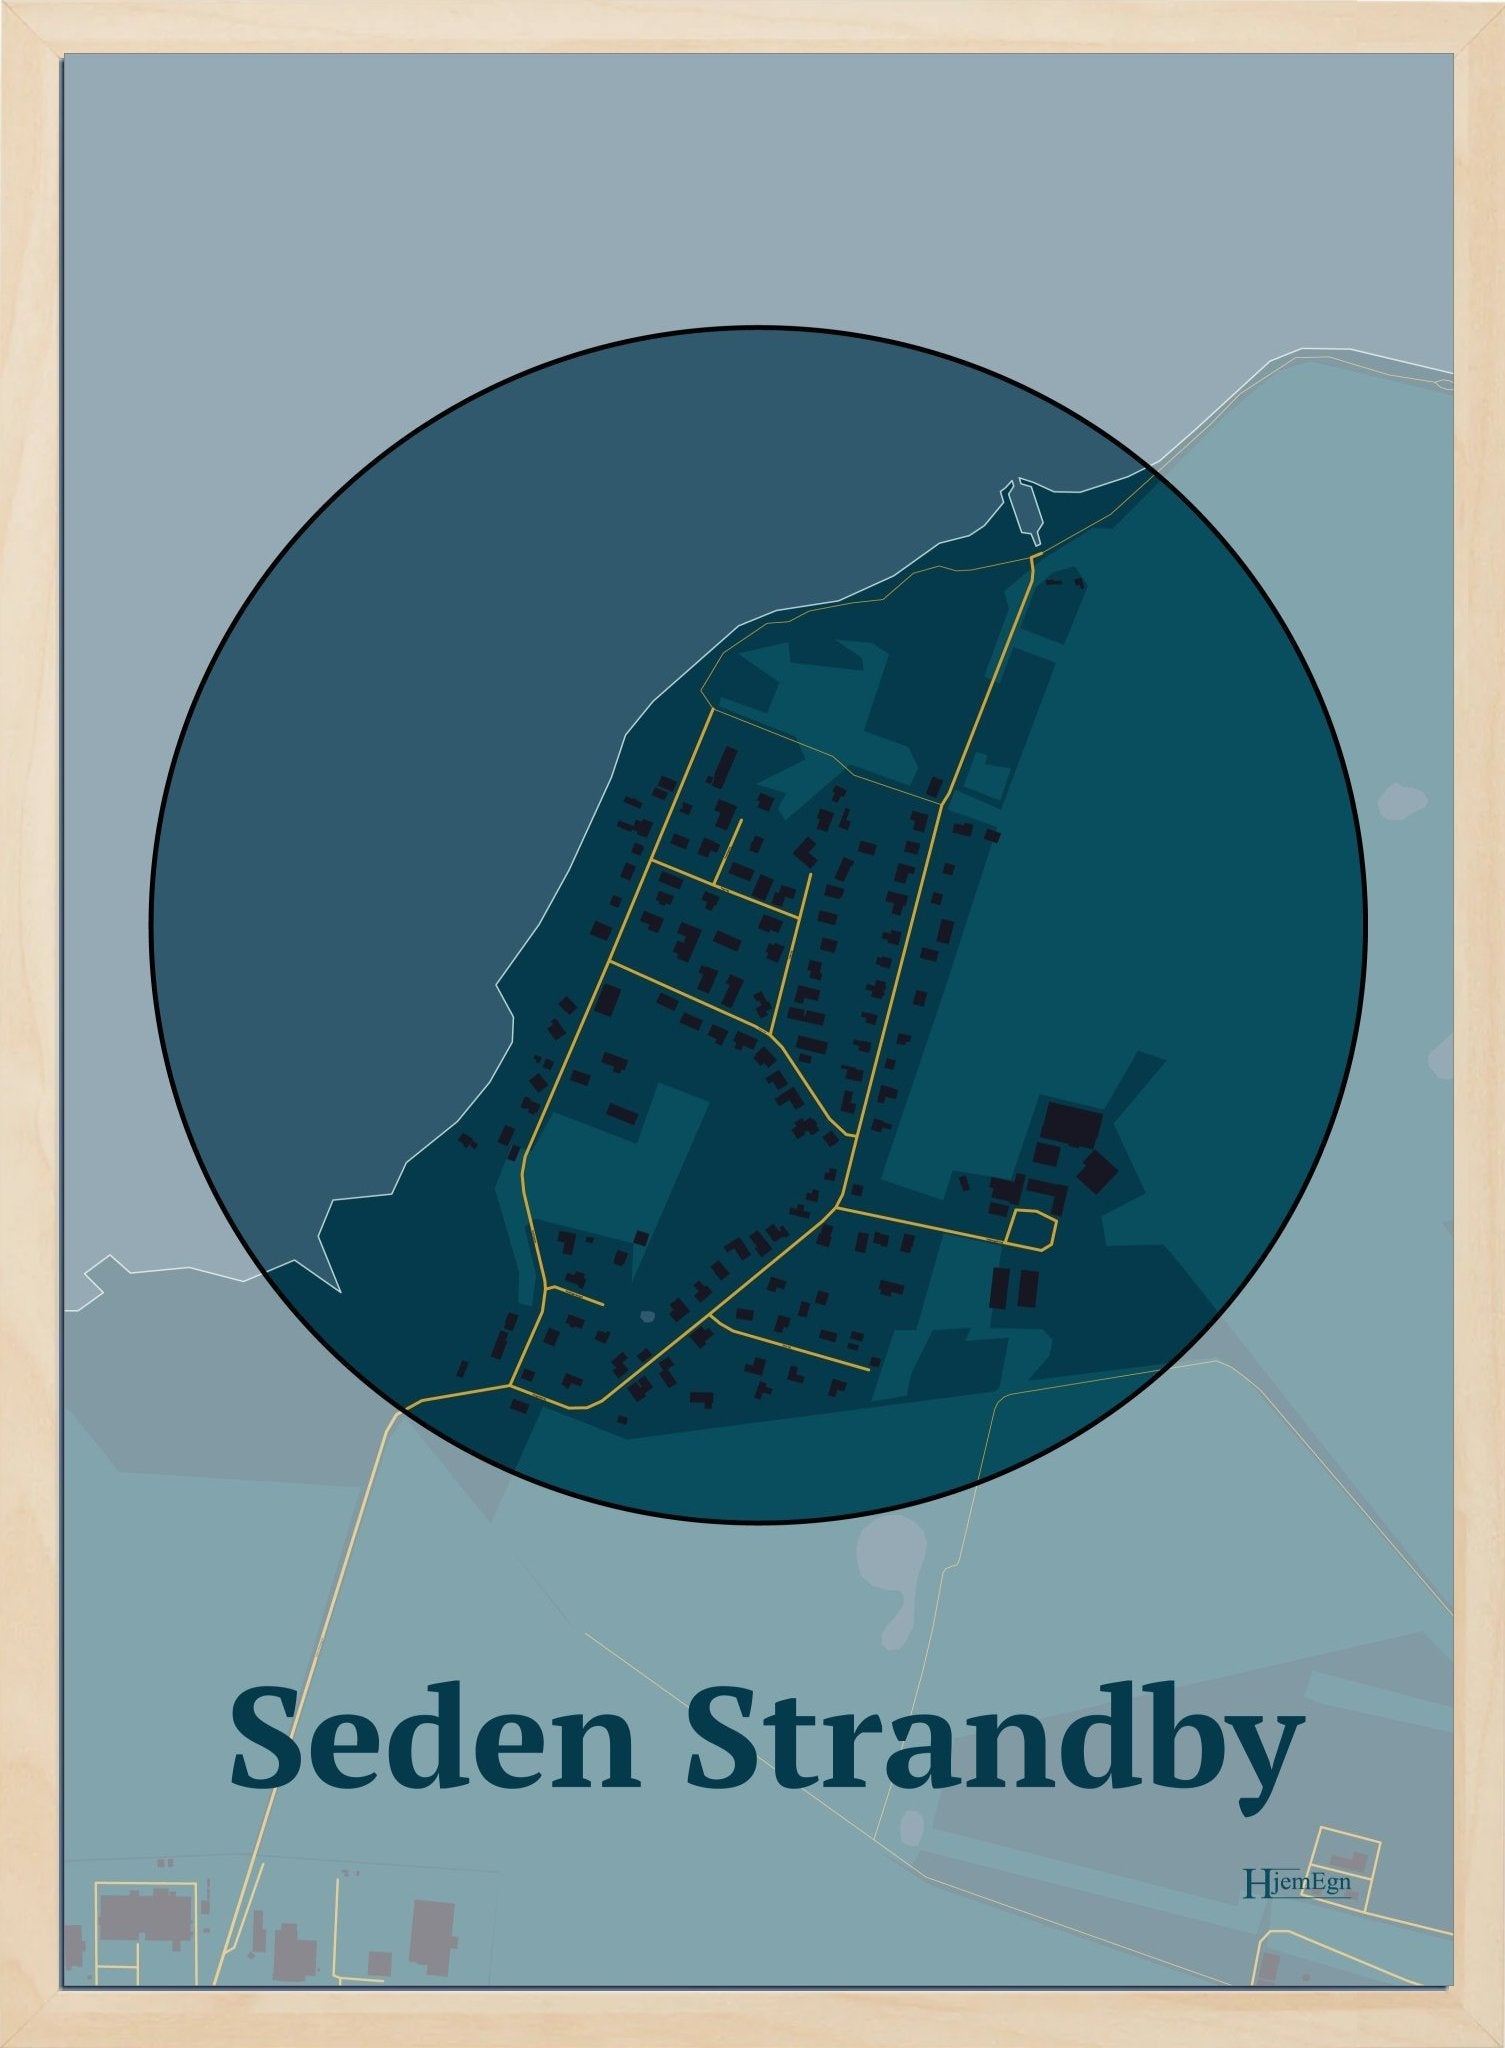 Seden Strandby plakat i farve mørk blå og HjemEgn.dk design centrum. Design bykort for Seden Strandby